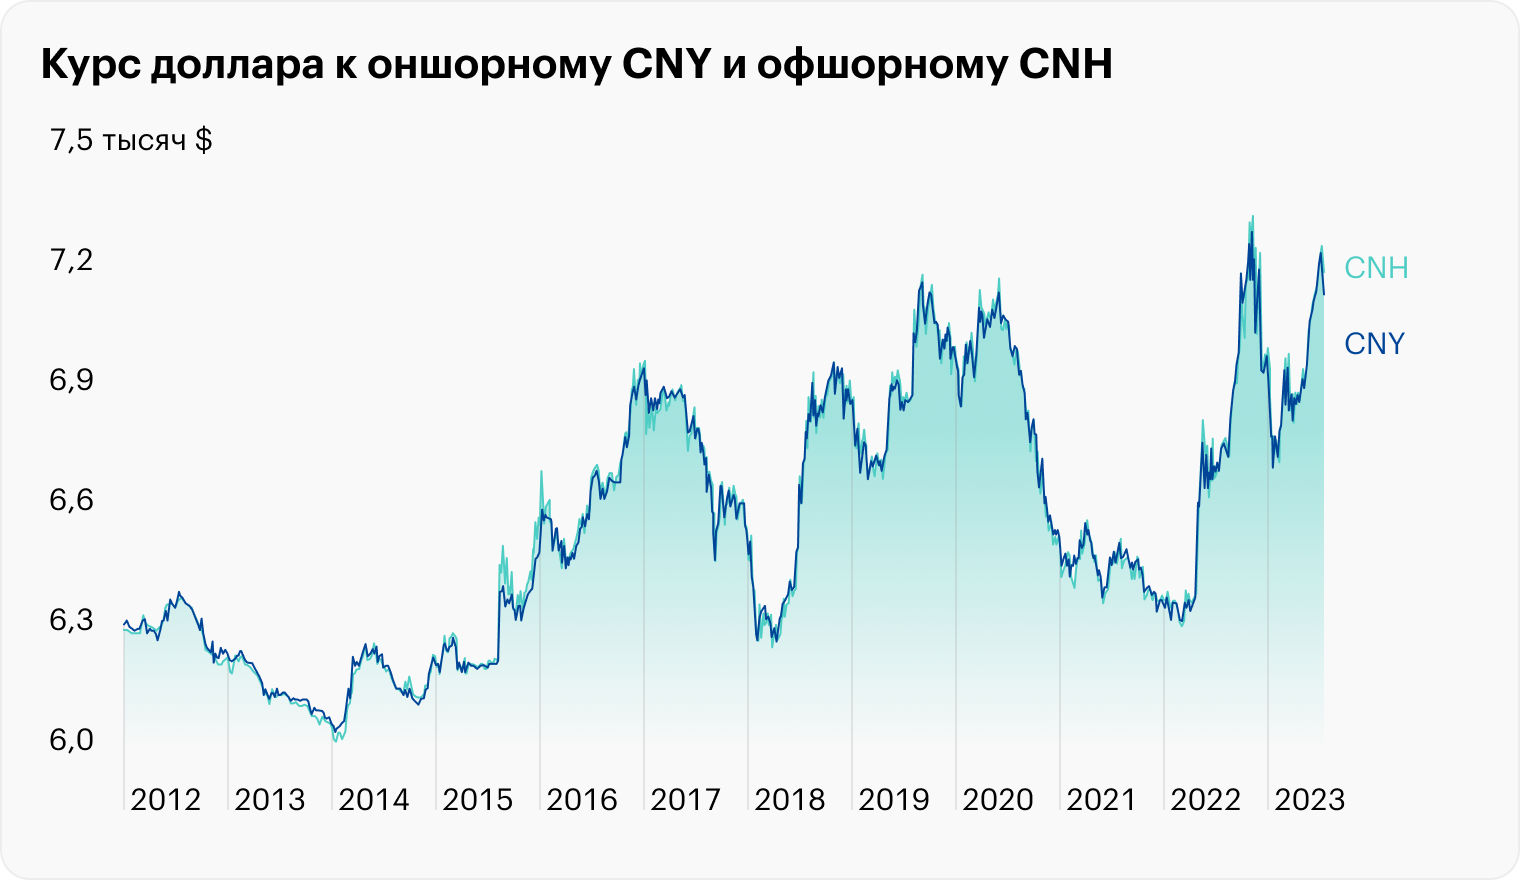 Источник: Market Watch, USD CNY и USD CNH на TradingView